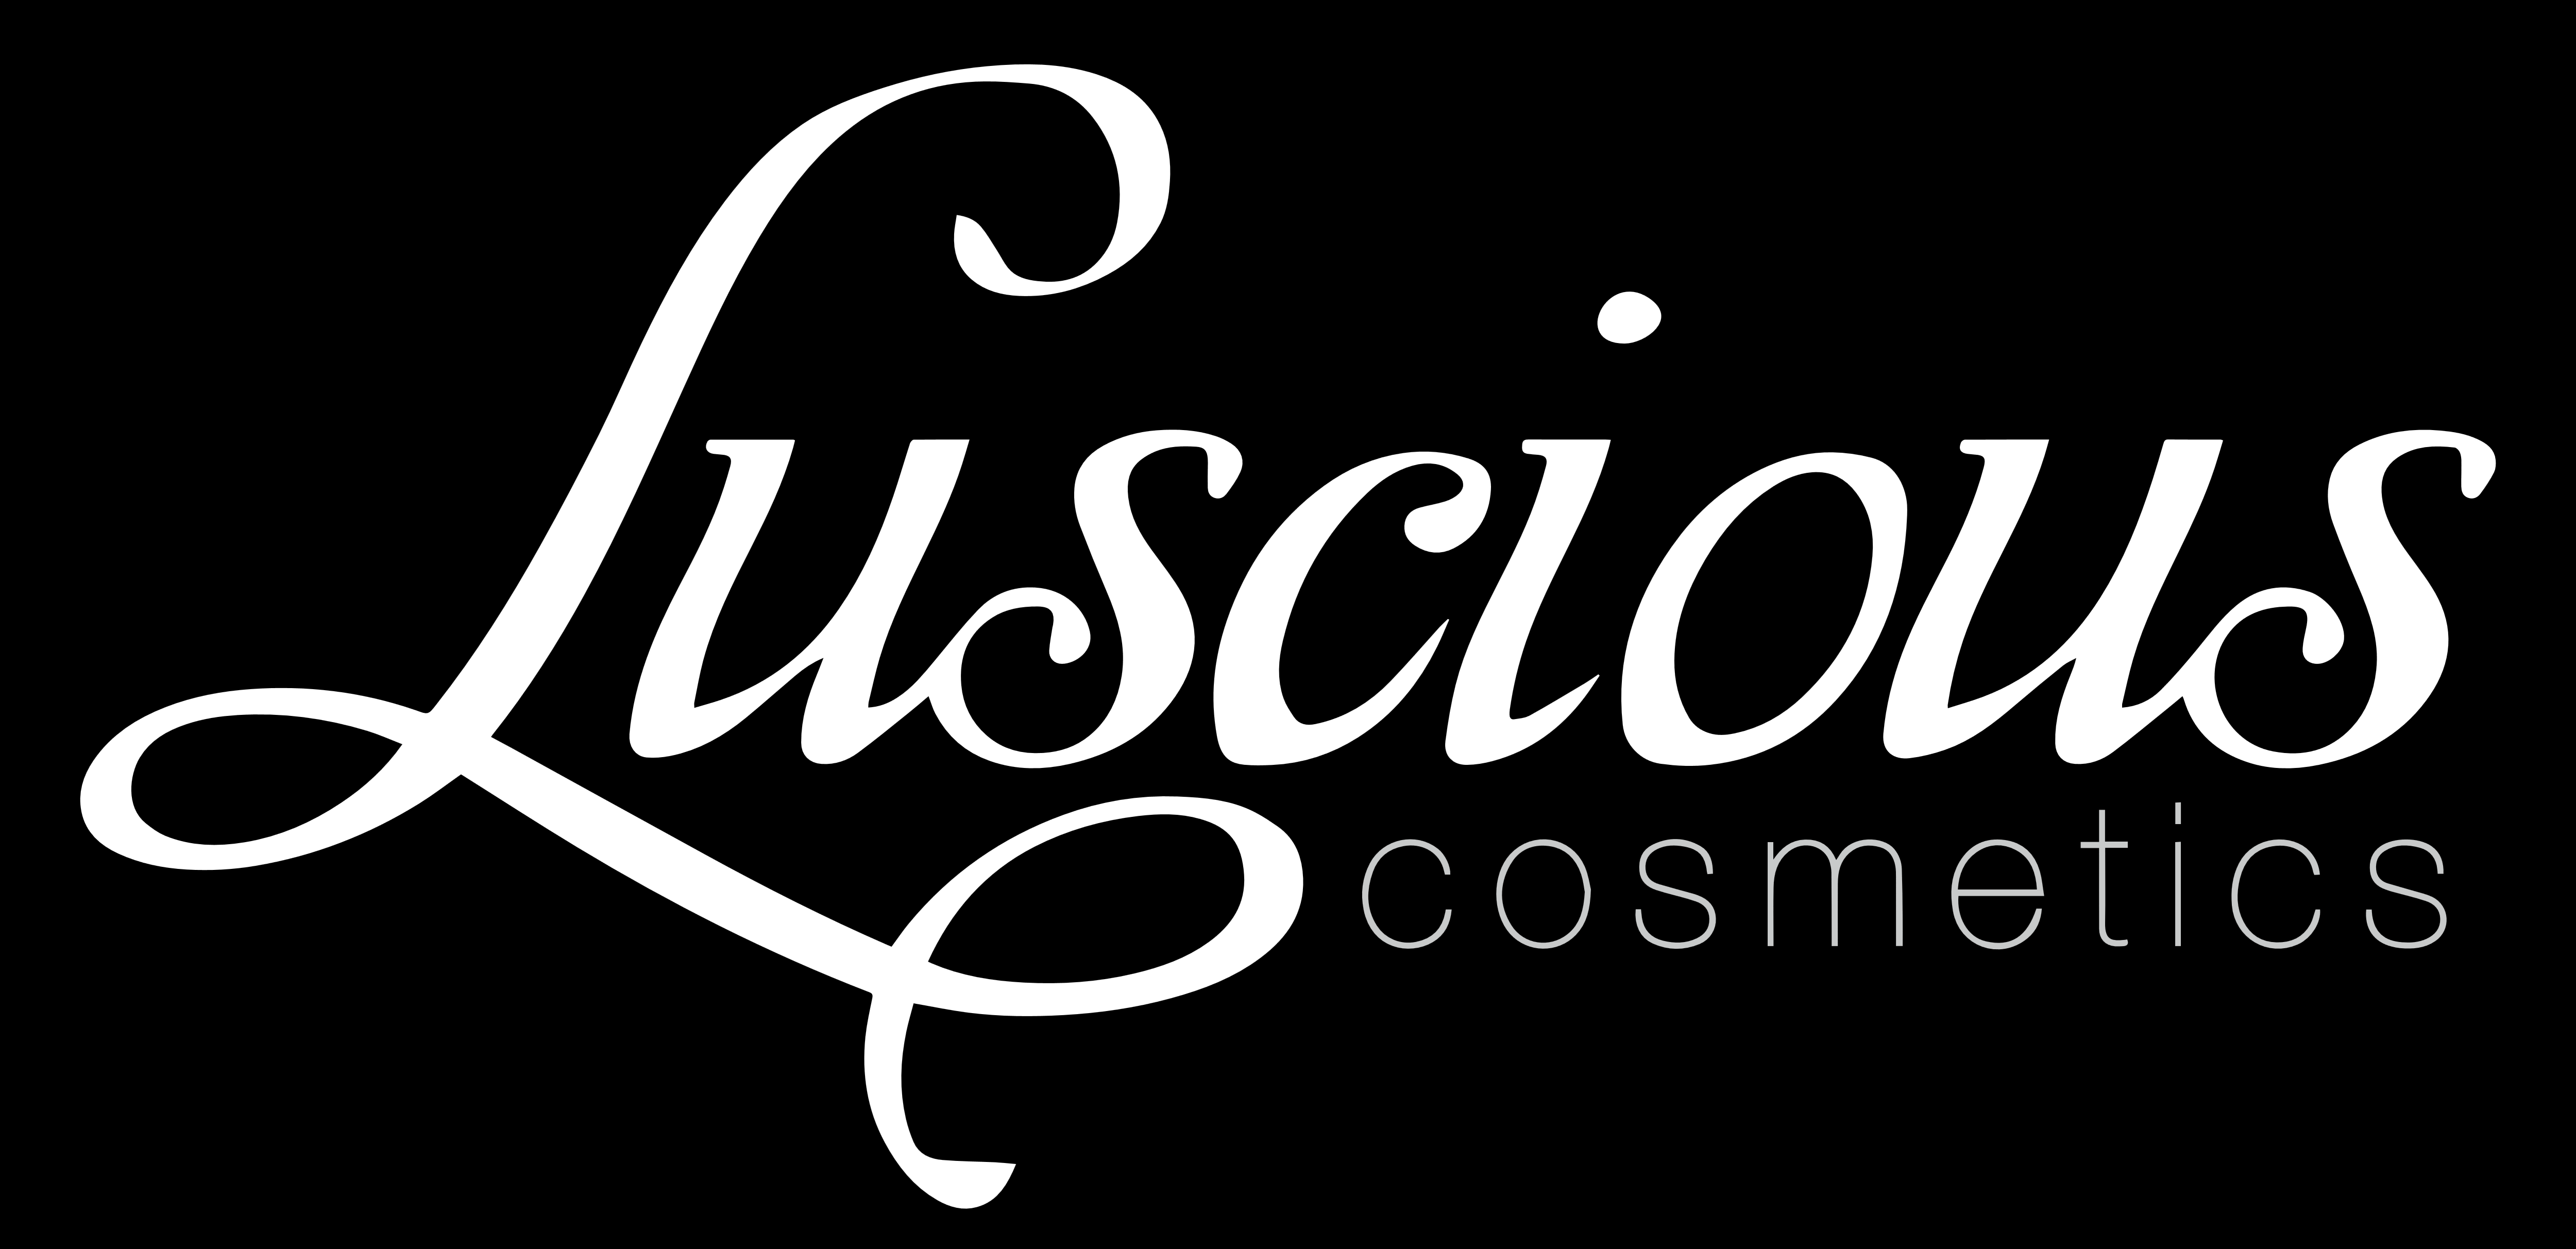 Luscious Cosmetics – Logos Download